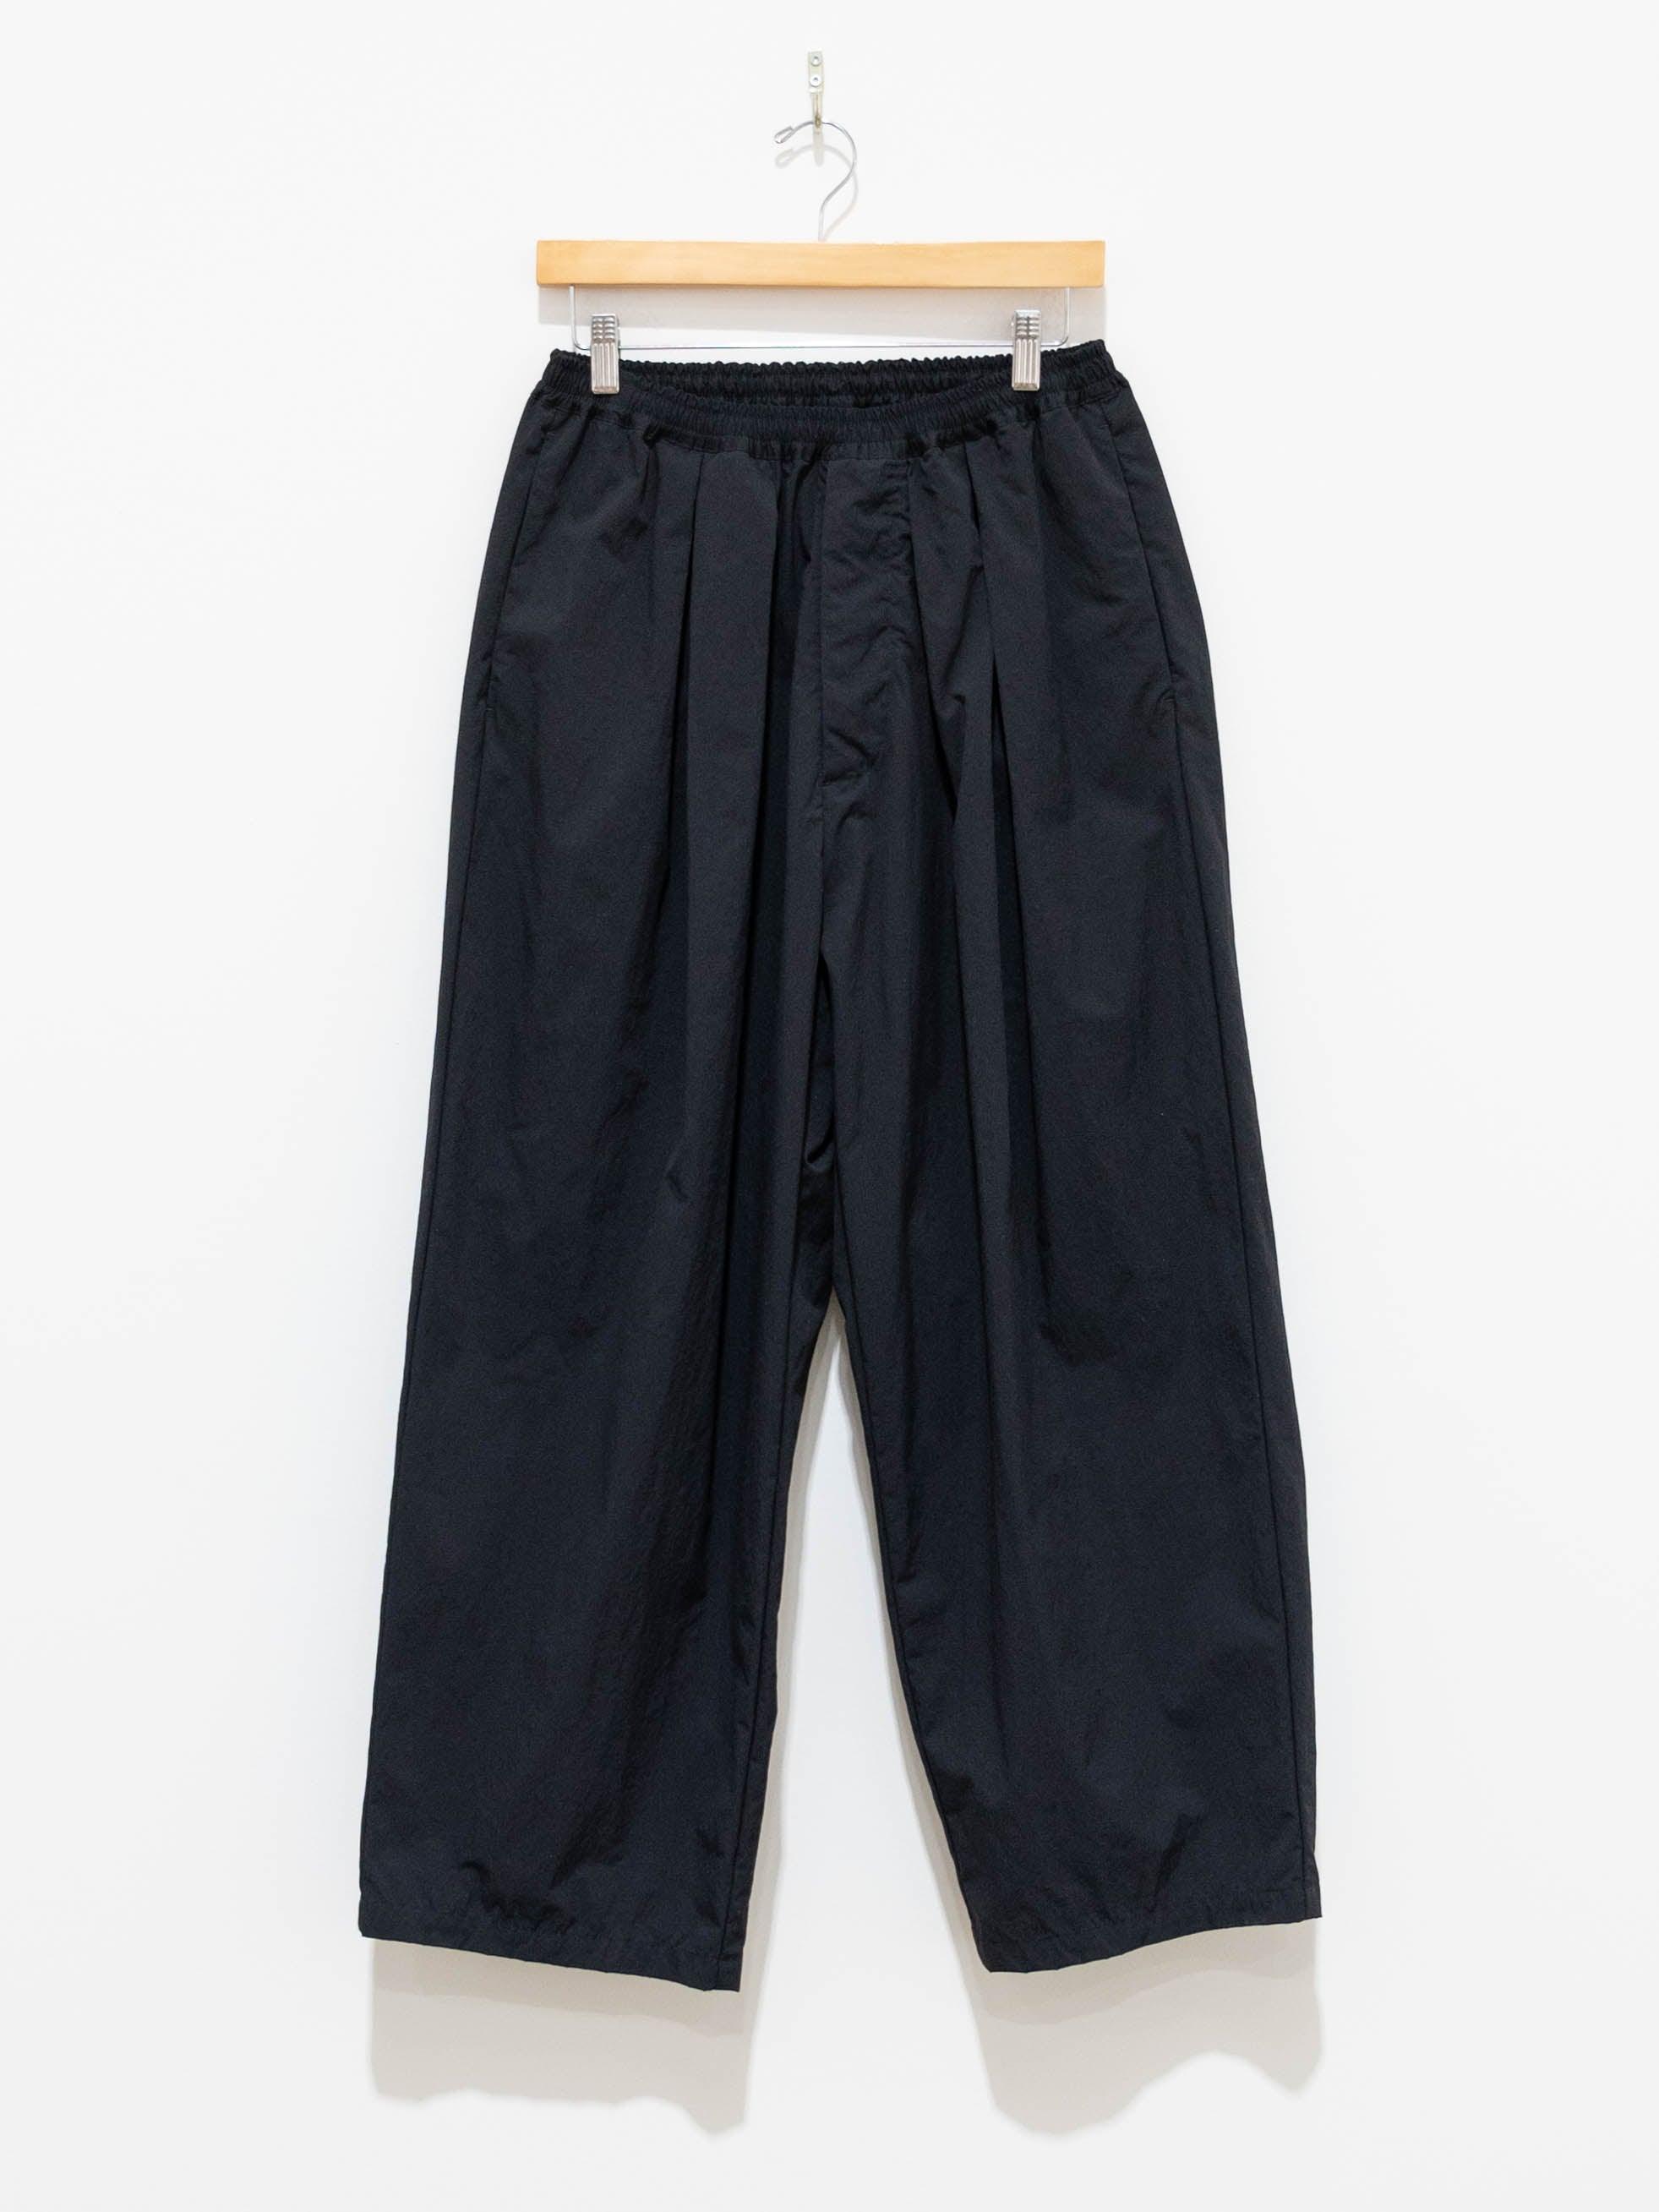 Namu Shop - Veritecoeur Recycled Nylon Tucked Pants - Black